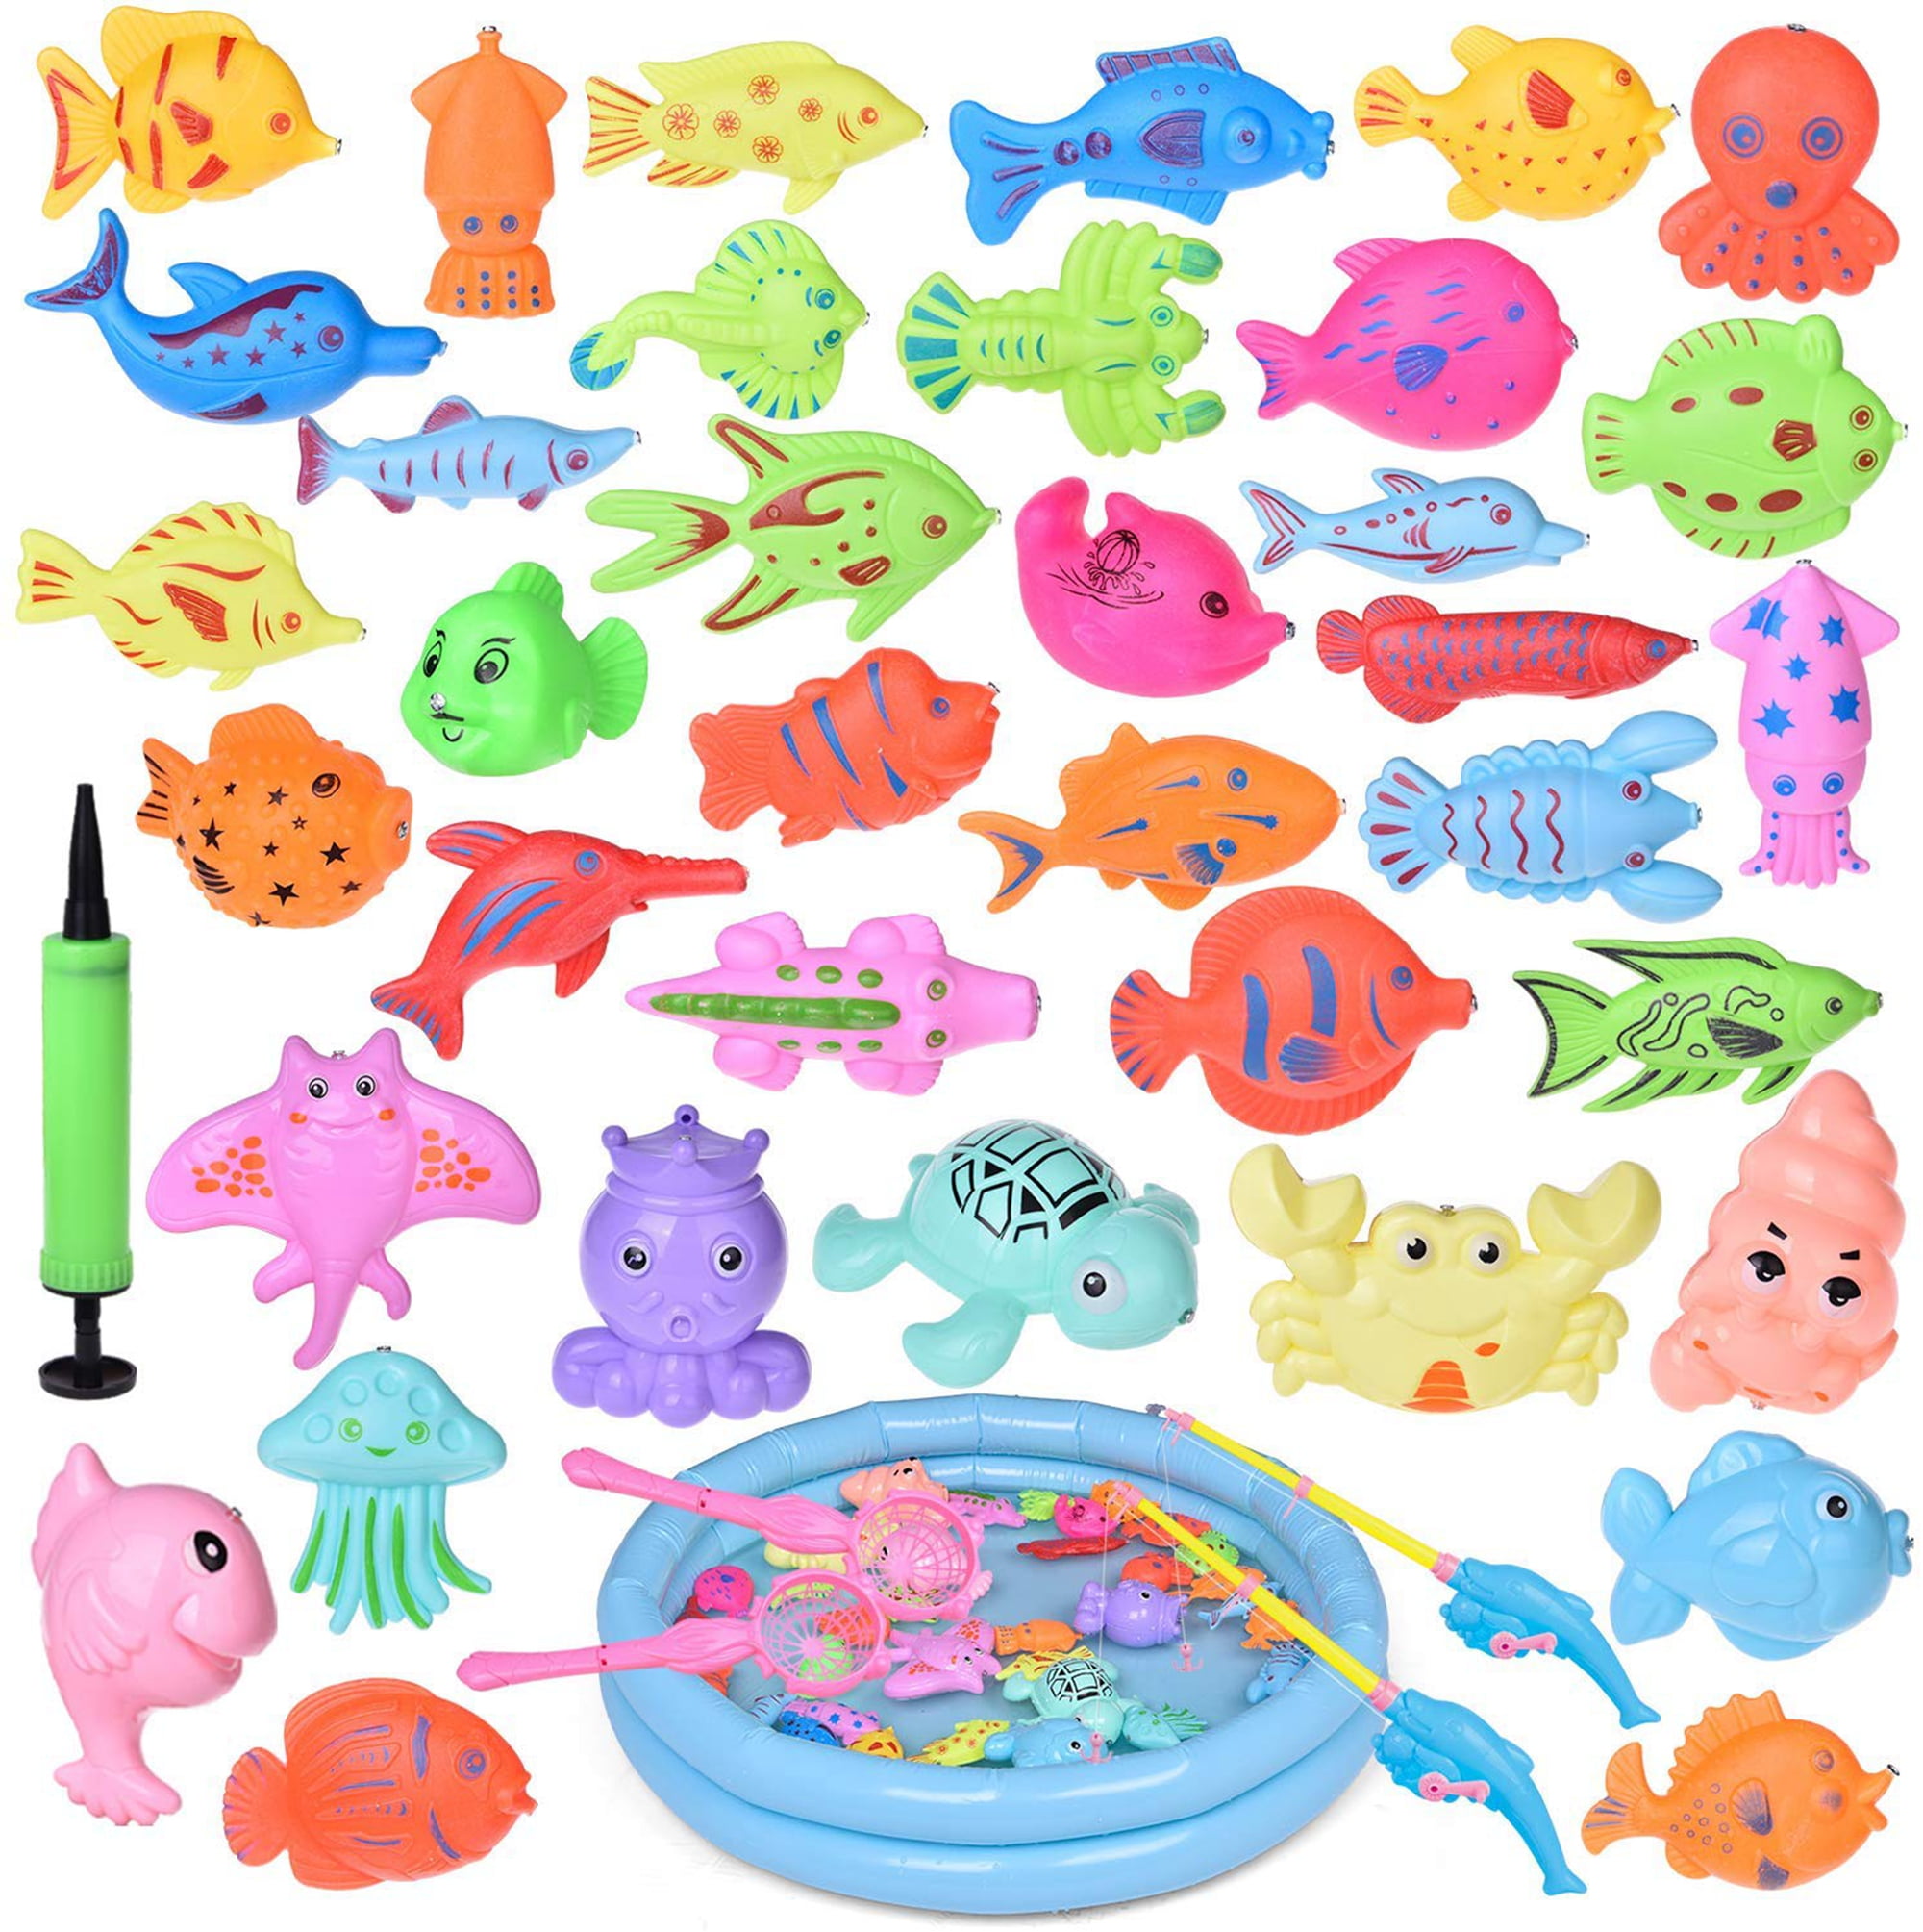 Magnetic Fishing Toy 10 Fish Kid Baby Bath Time Fun Game U3J9 